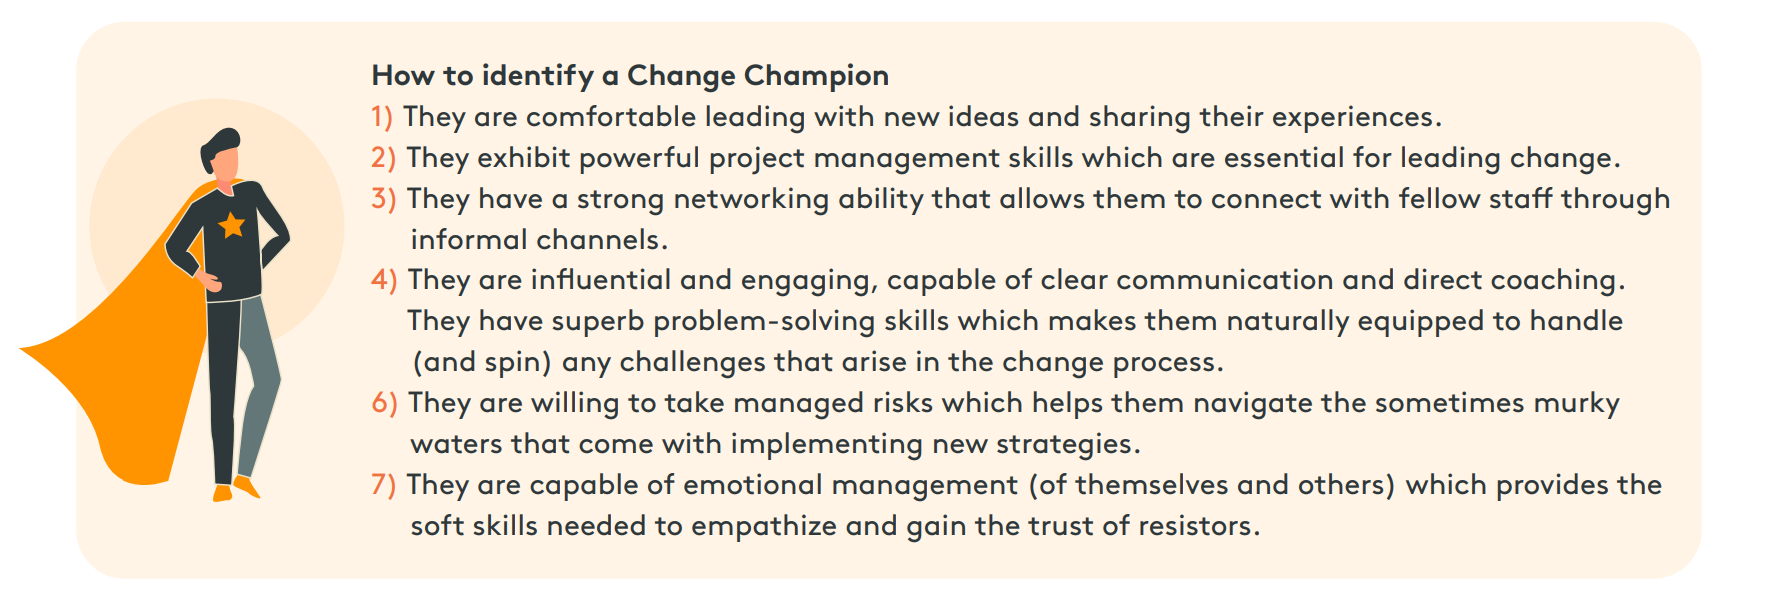 change management - change champion